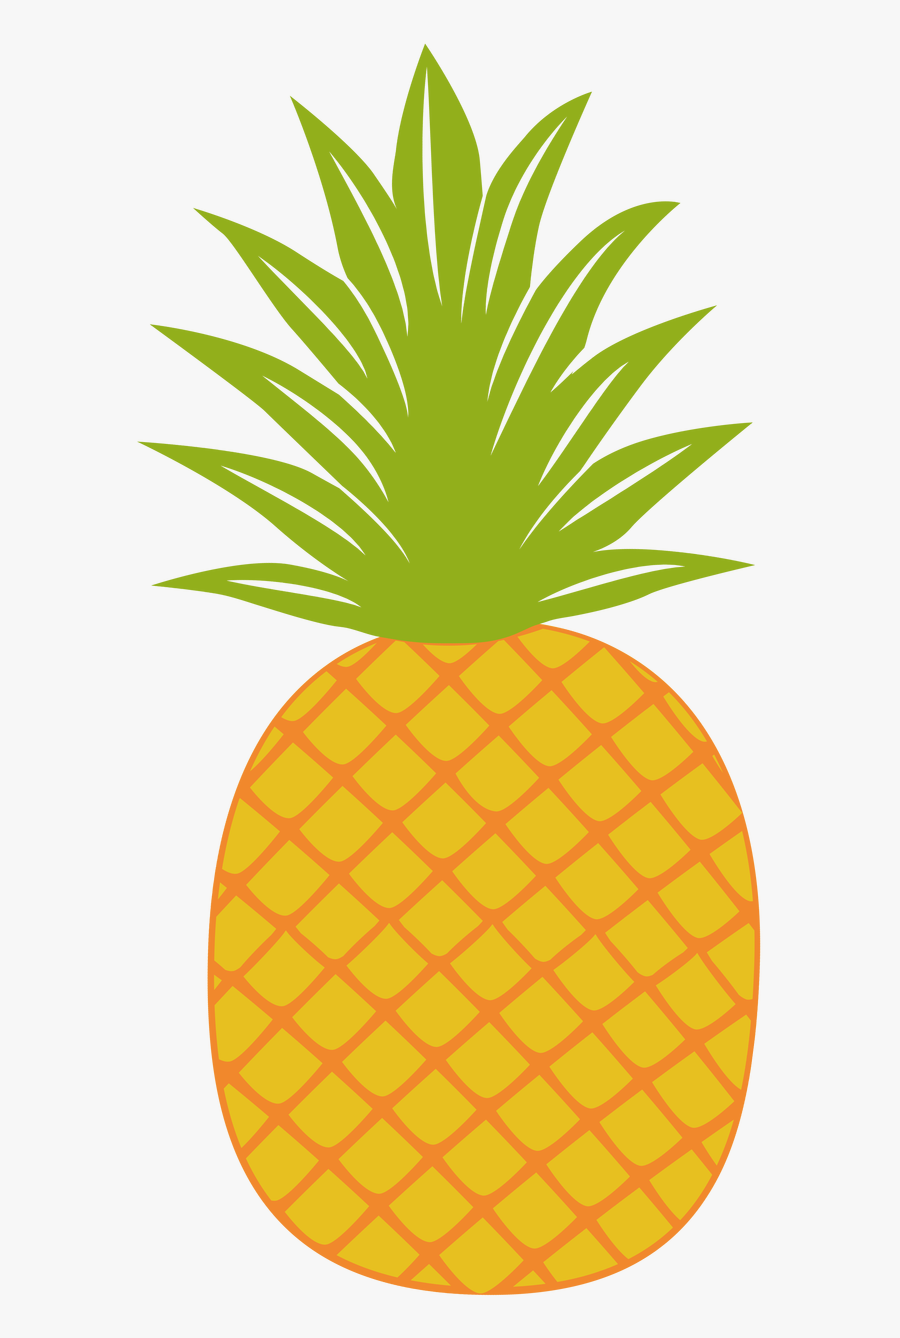 Pineapple Clipart Fancy - Cut File Pineapple Svg, Transparent Clipart